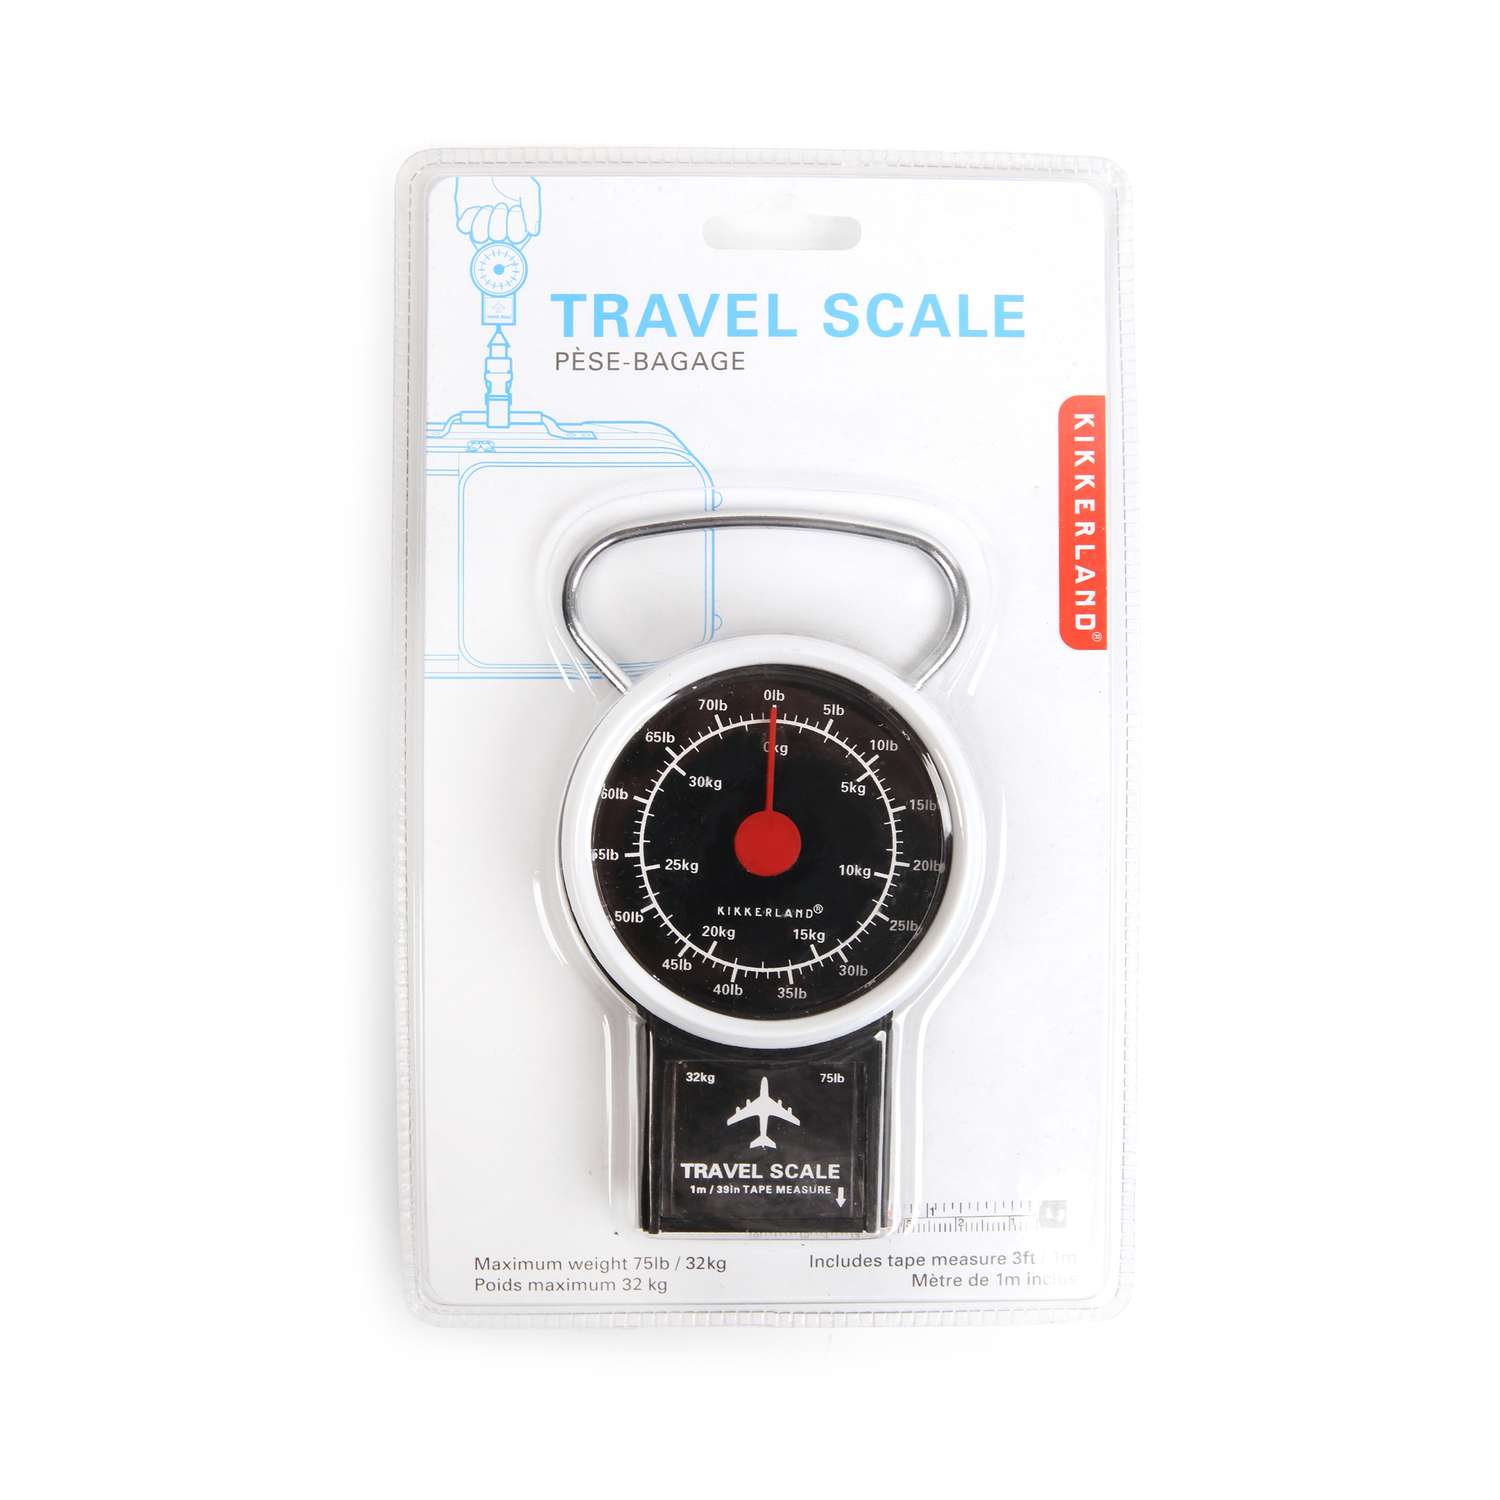 Taylor White Luggage Scale - Ace Hardware